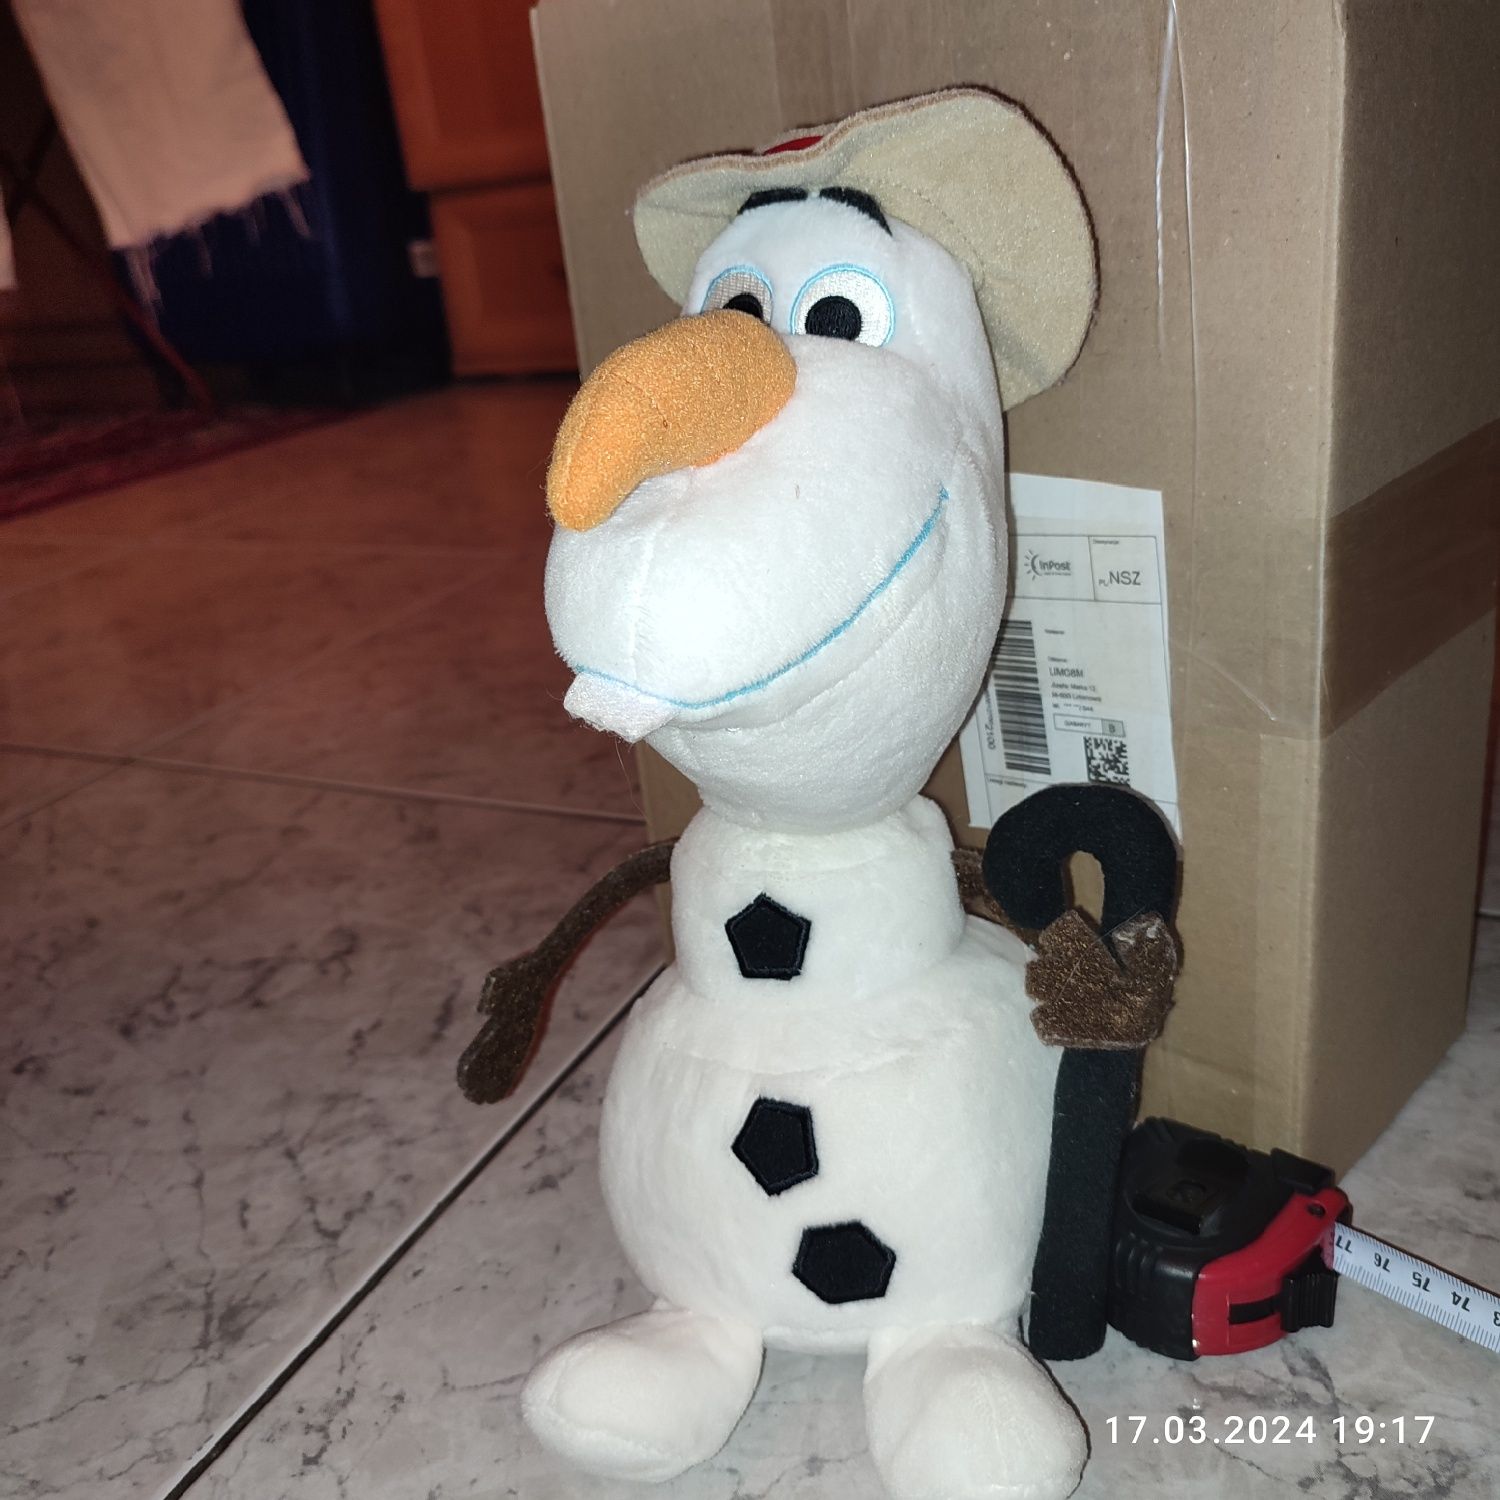 maskotka Olaf z krainy lodu ok 31 cm
Frozen